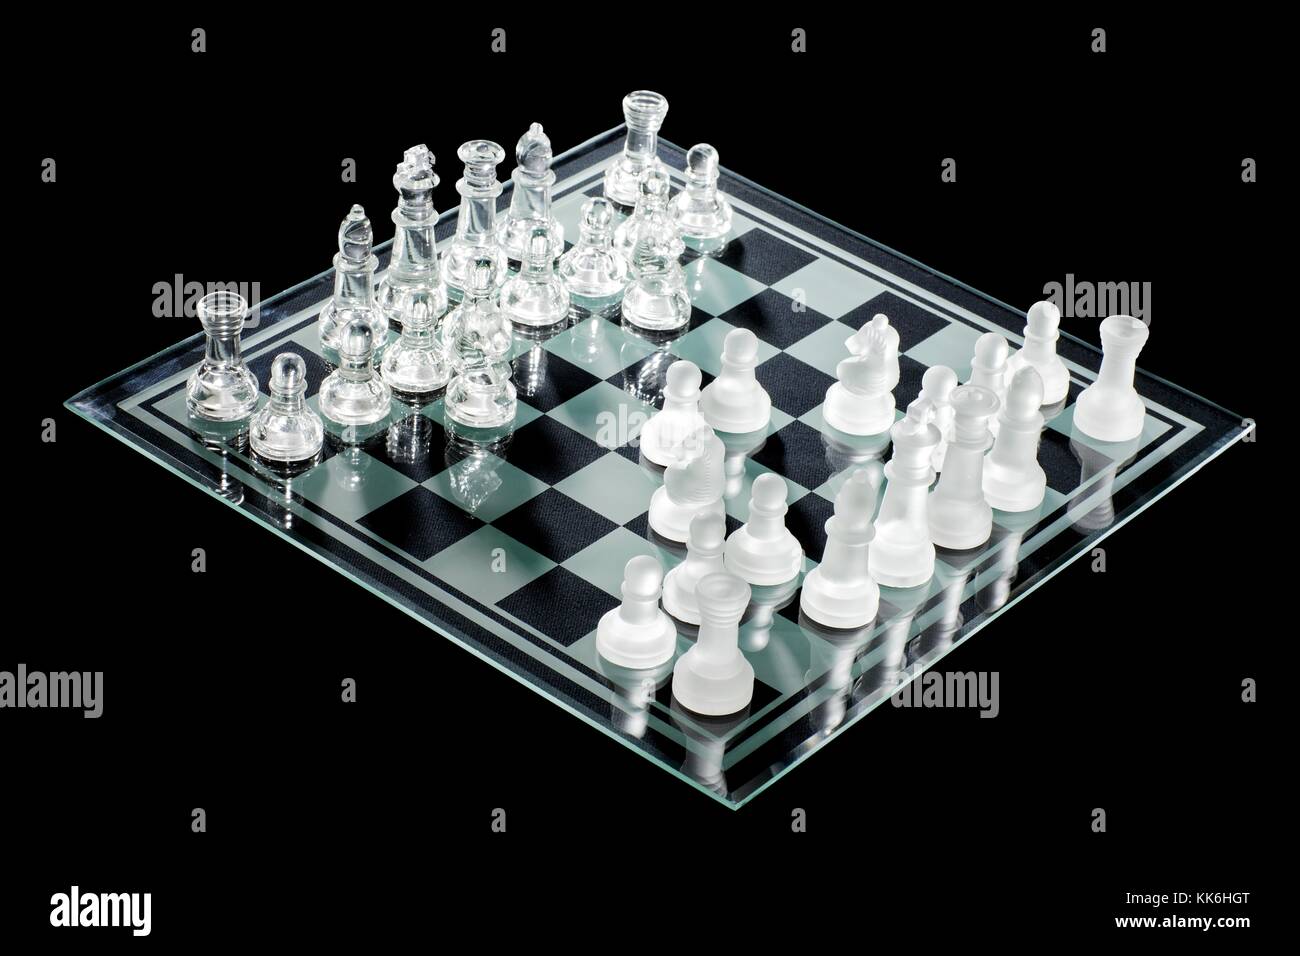 Glass chess board -Fotos und -Bildmaterial in hoher Auflösung – Alamy